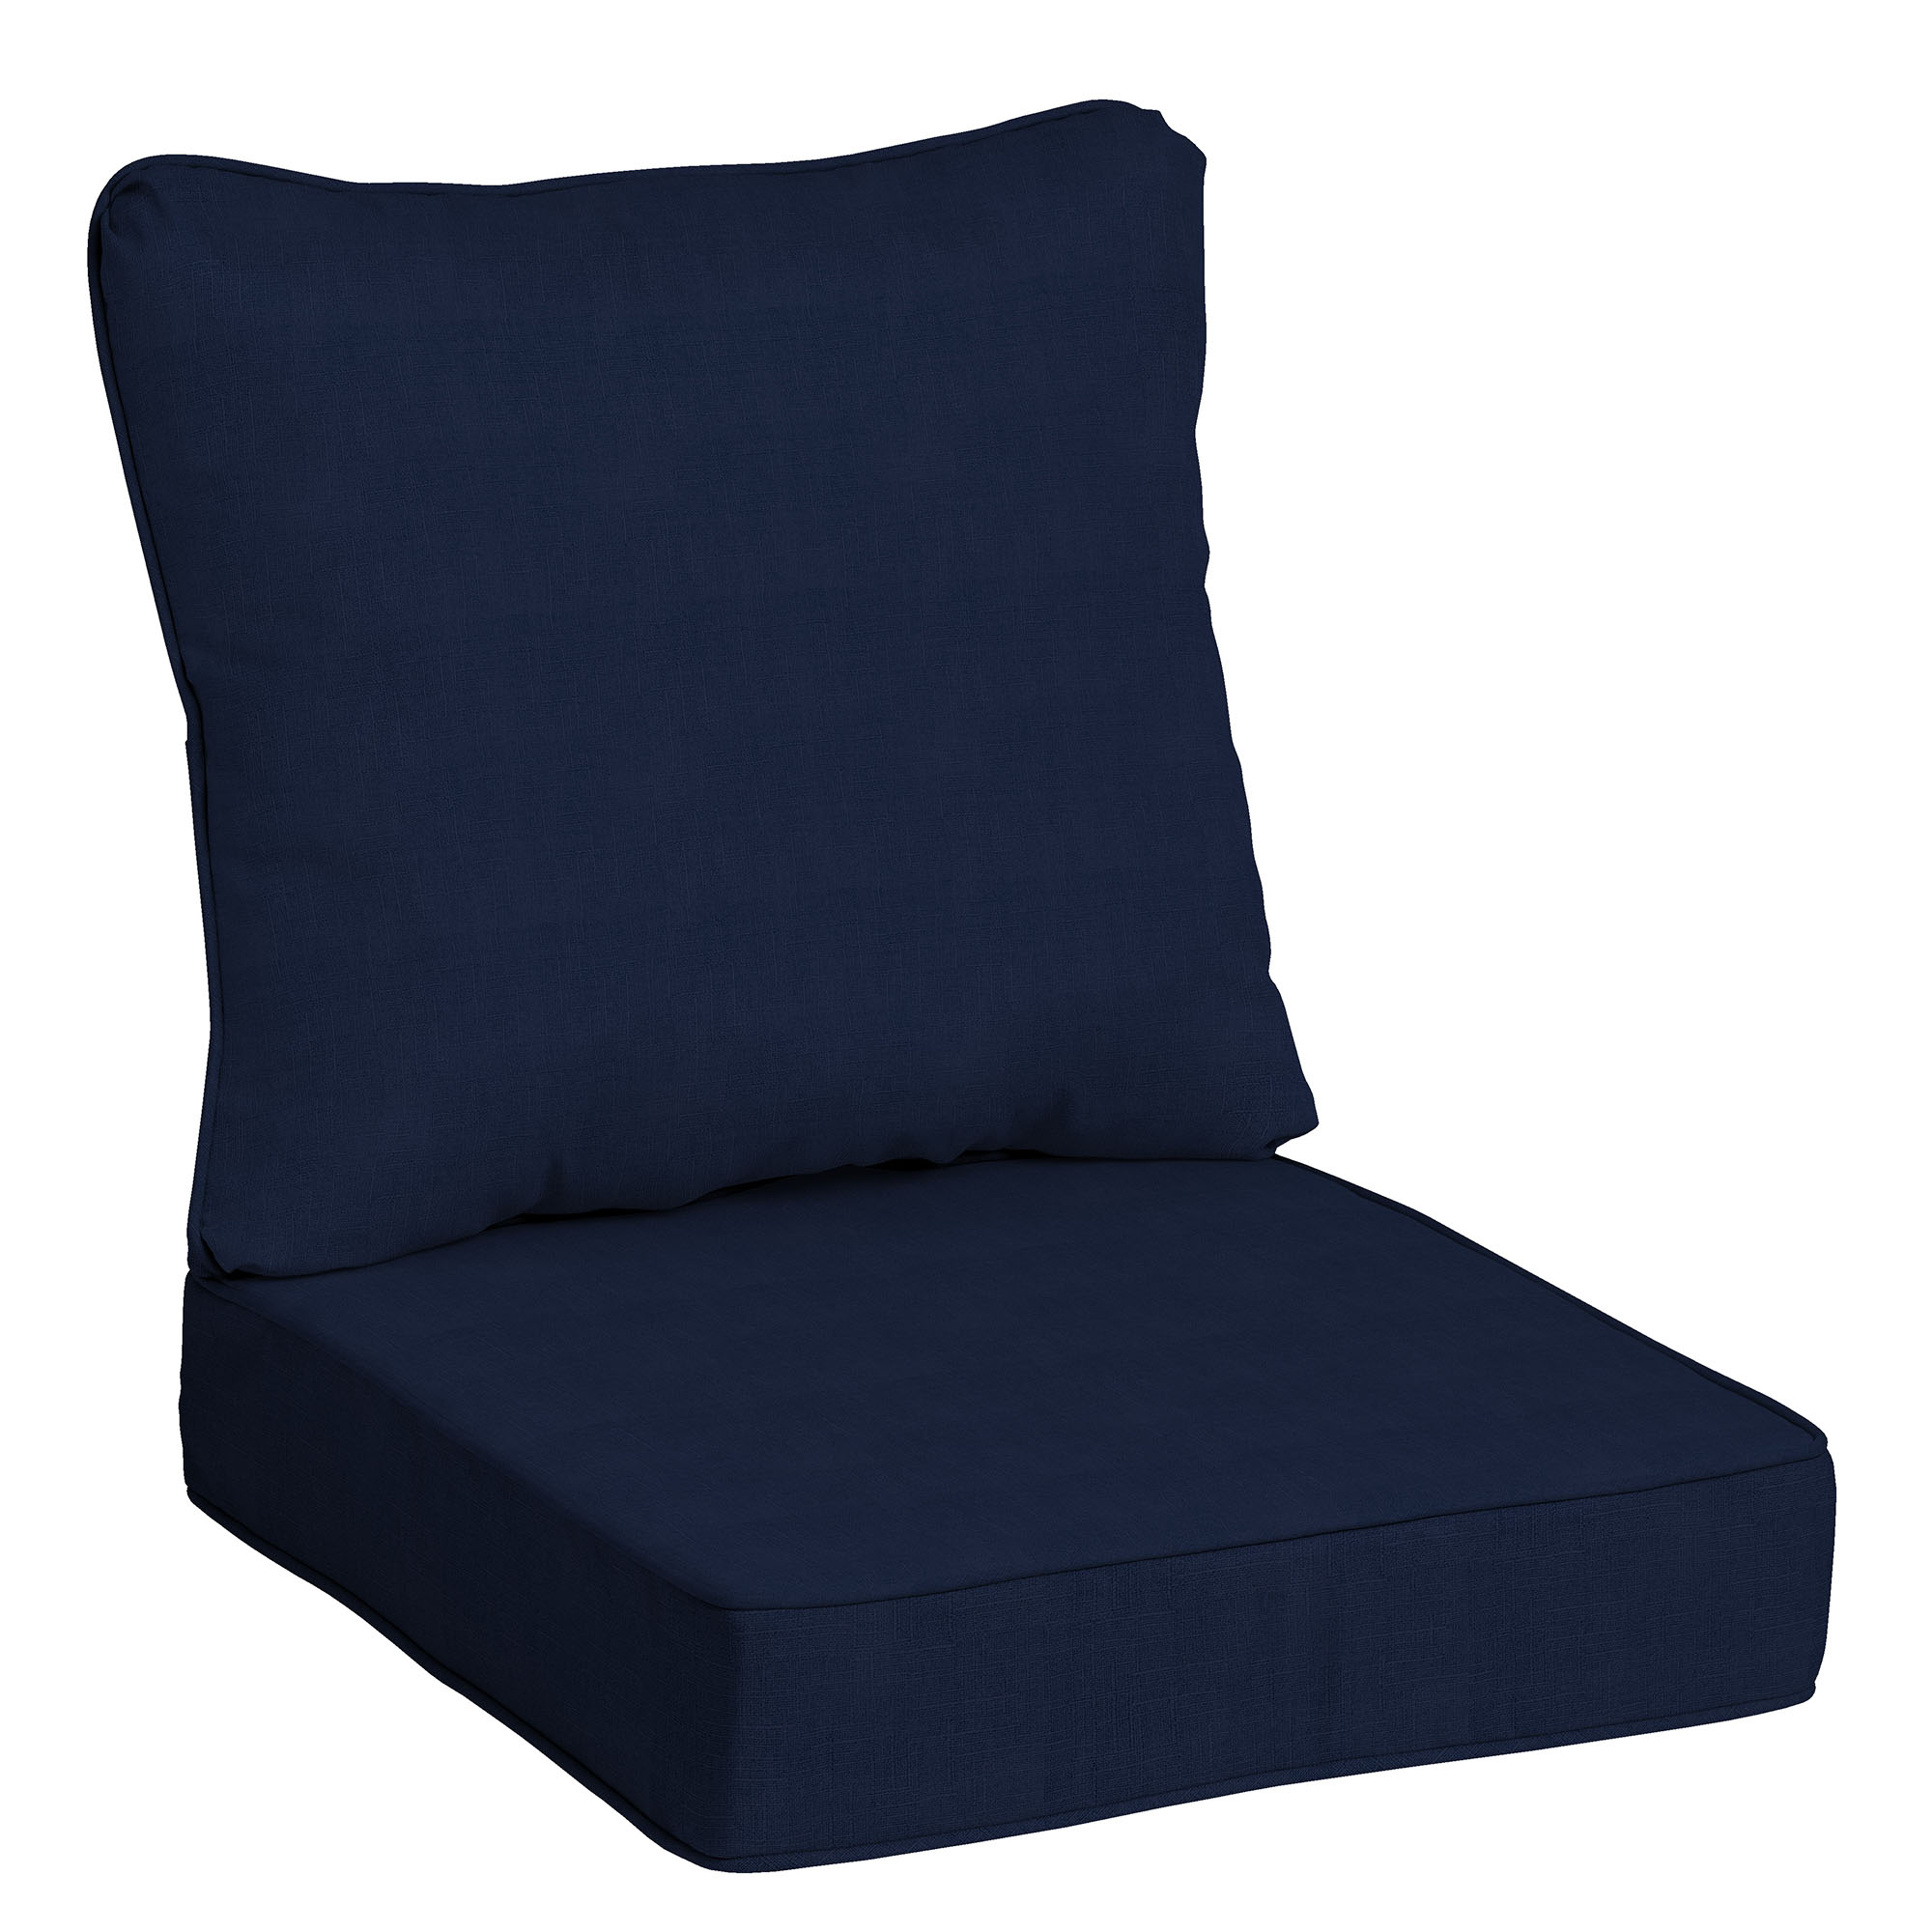 Outdoor Waterproof Bench Cushion, 51x20, Flower Swing Cushion Patio  Furniture Cushions 3 Seater, for Garden Patio Furniture Lounger Bench  (51x20 in